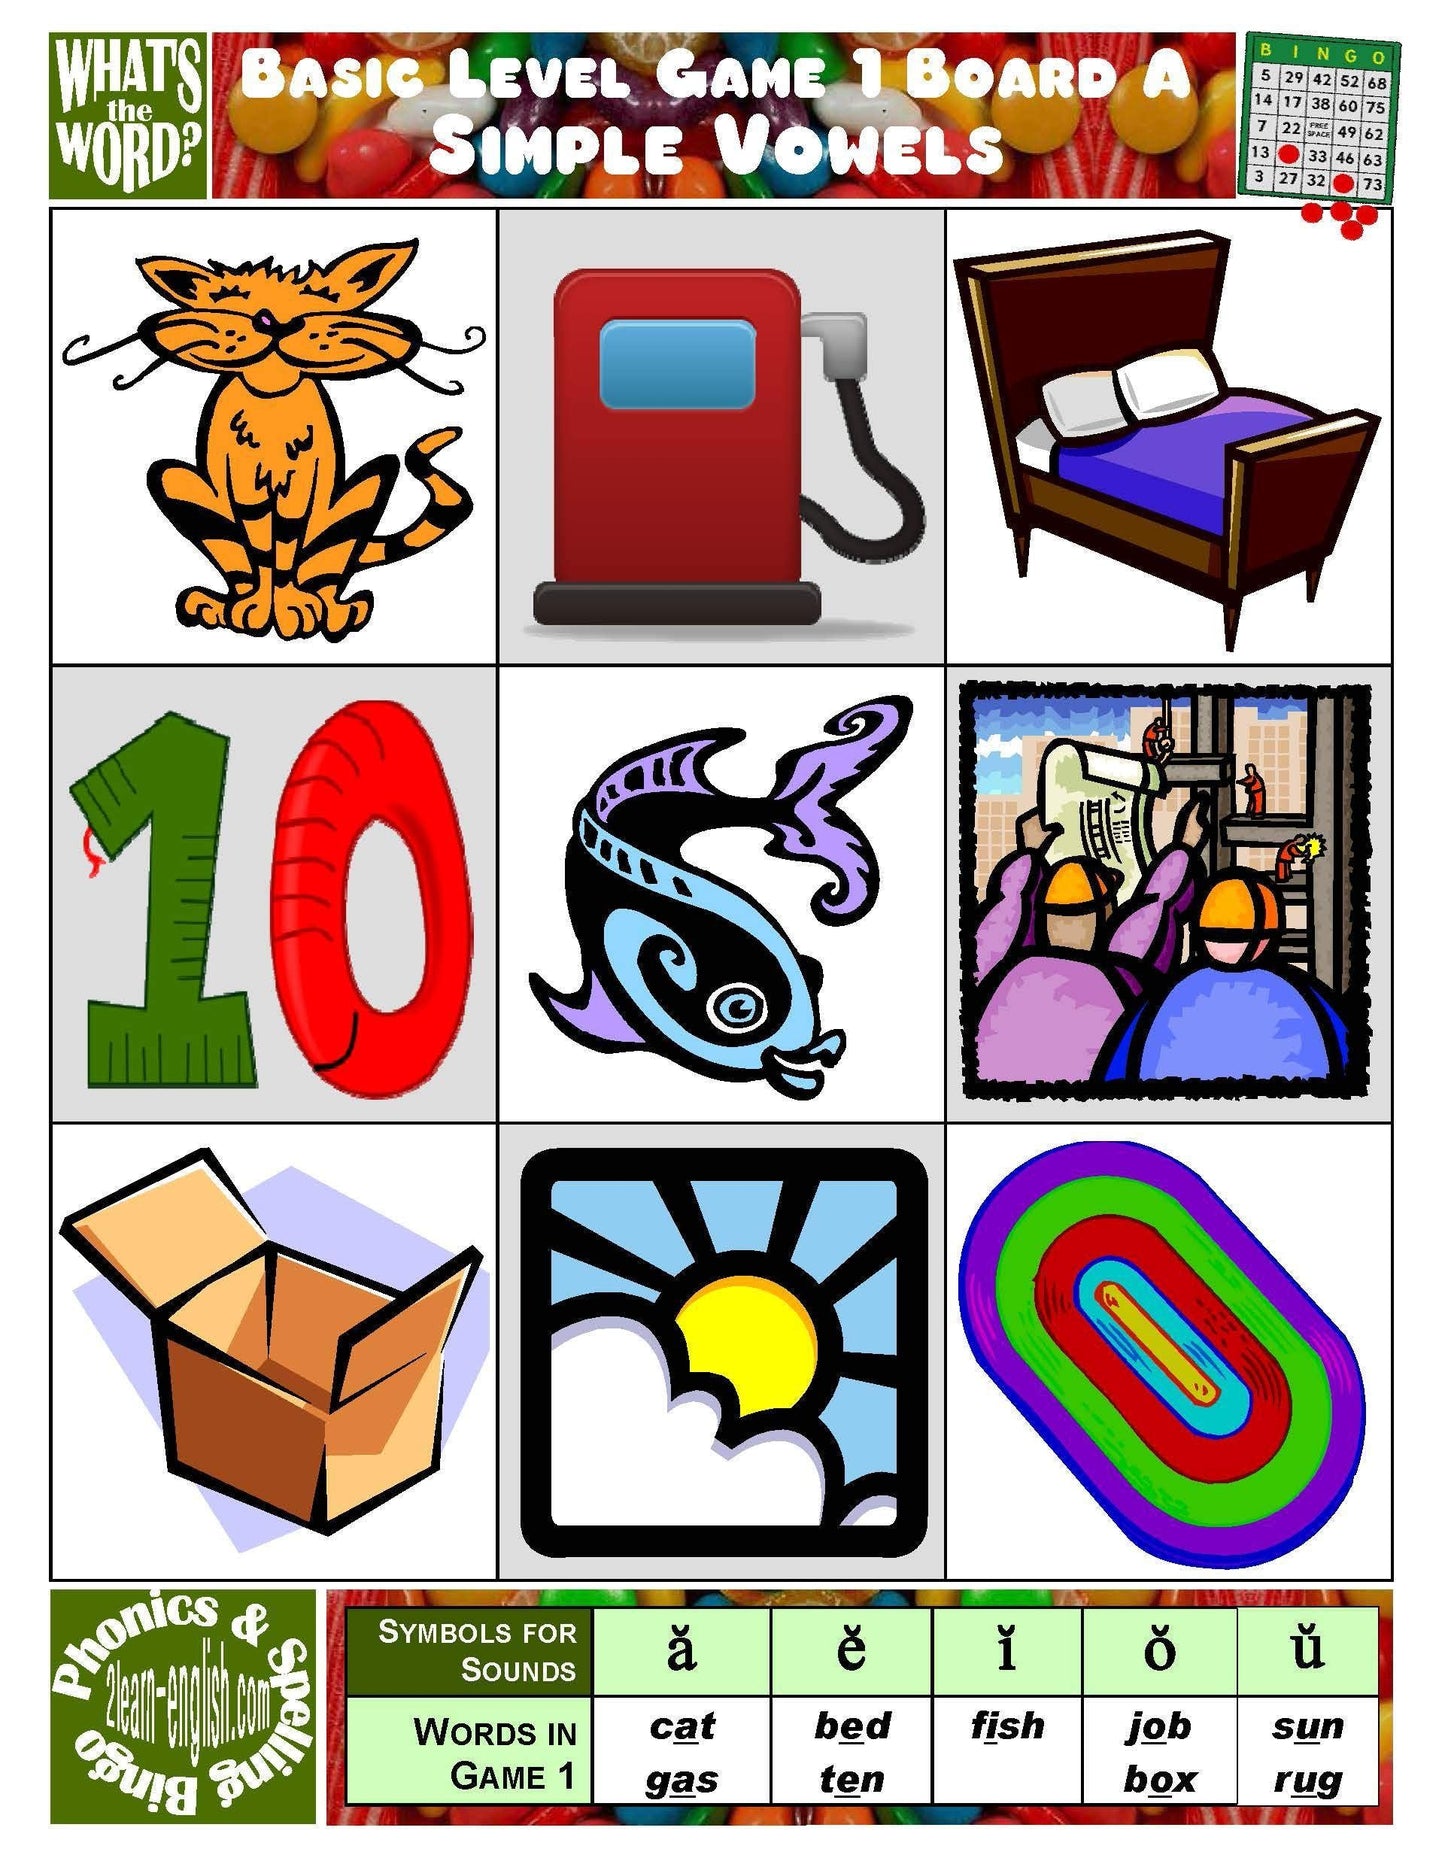 B. Phonics Bingo Level 1 = Basic + Activities & Ideas Book (Print Version + Shipping)